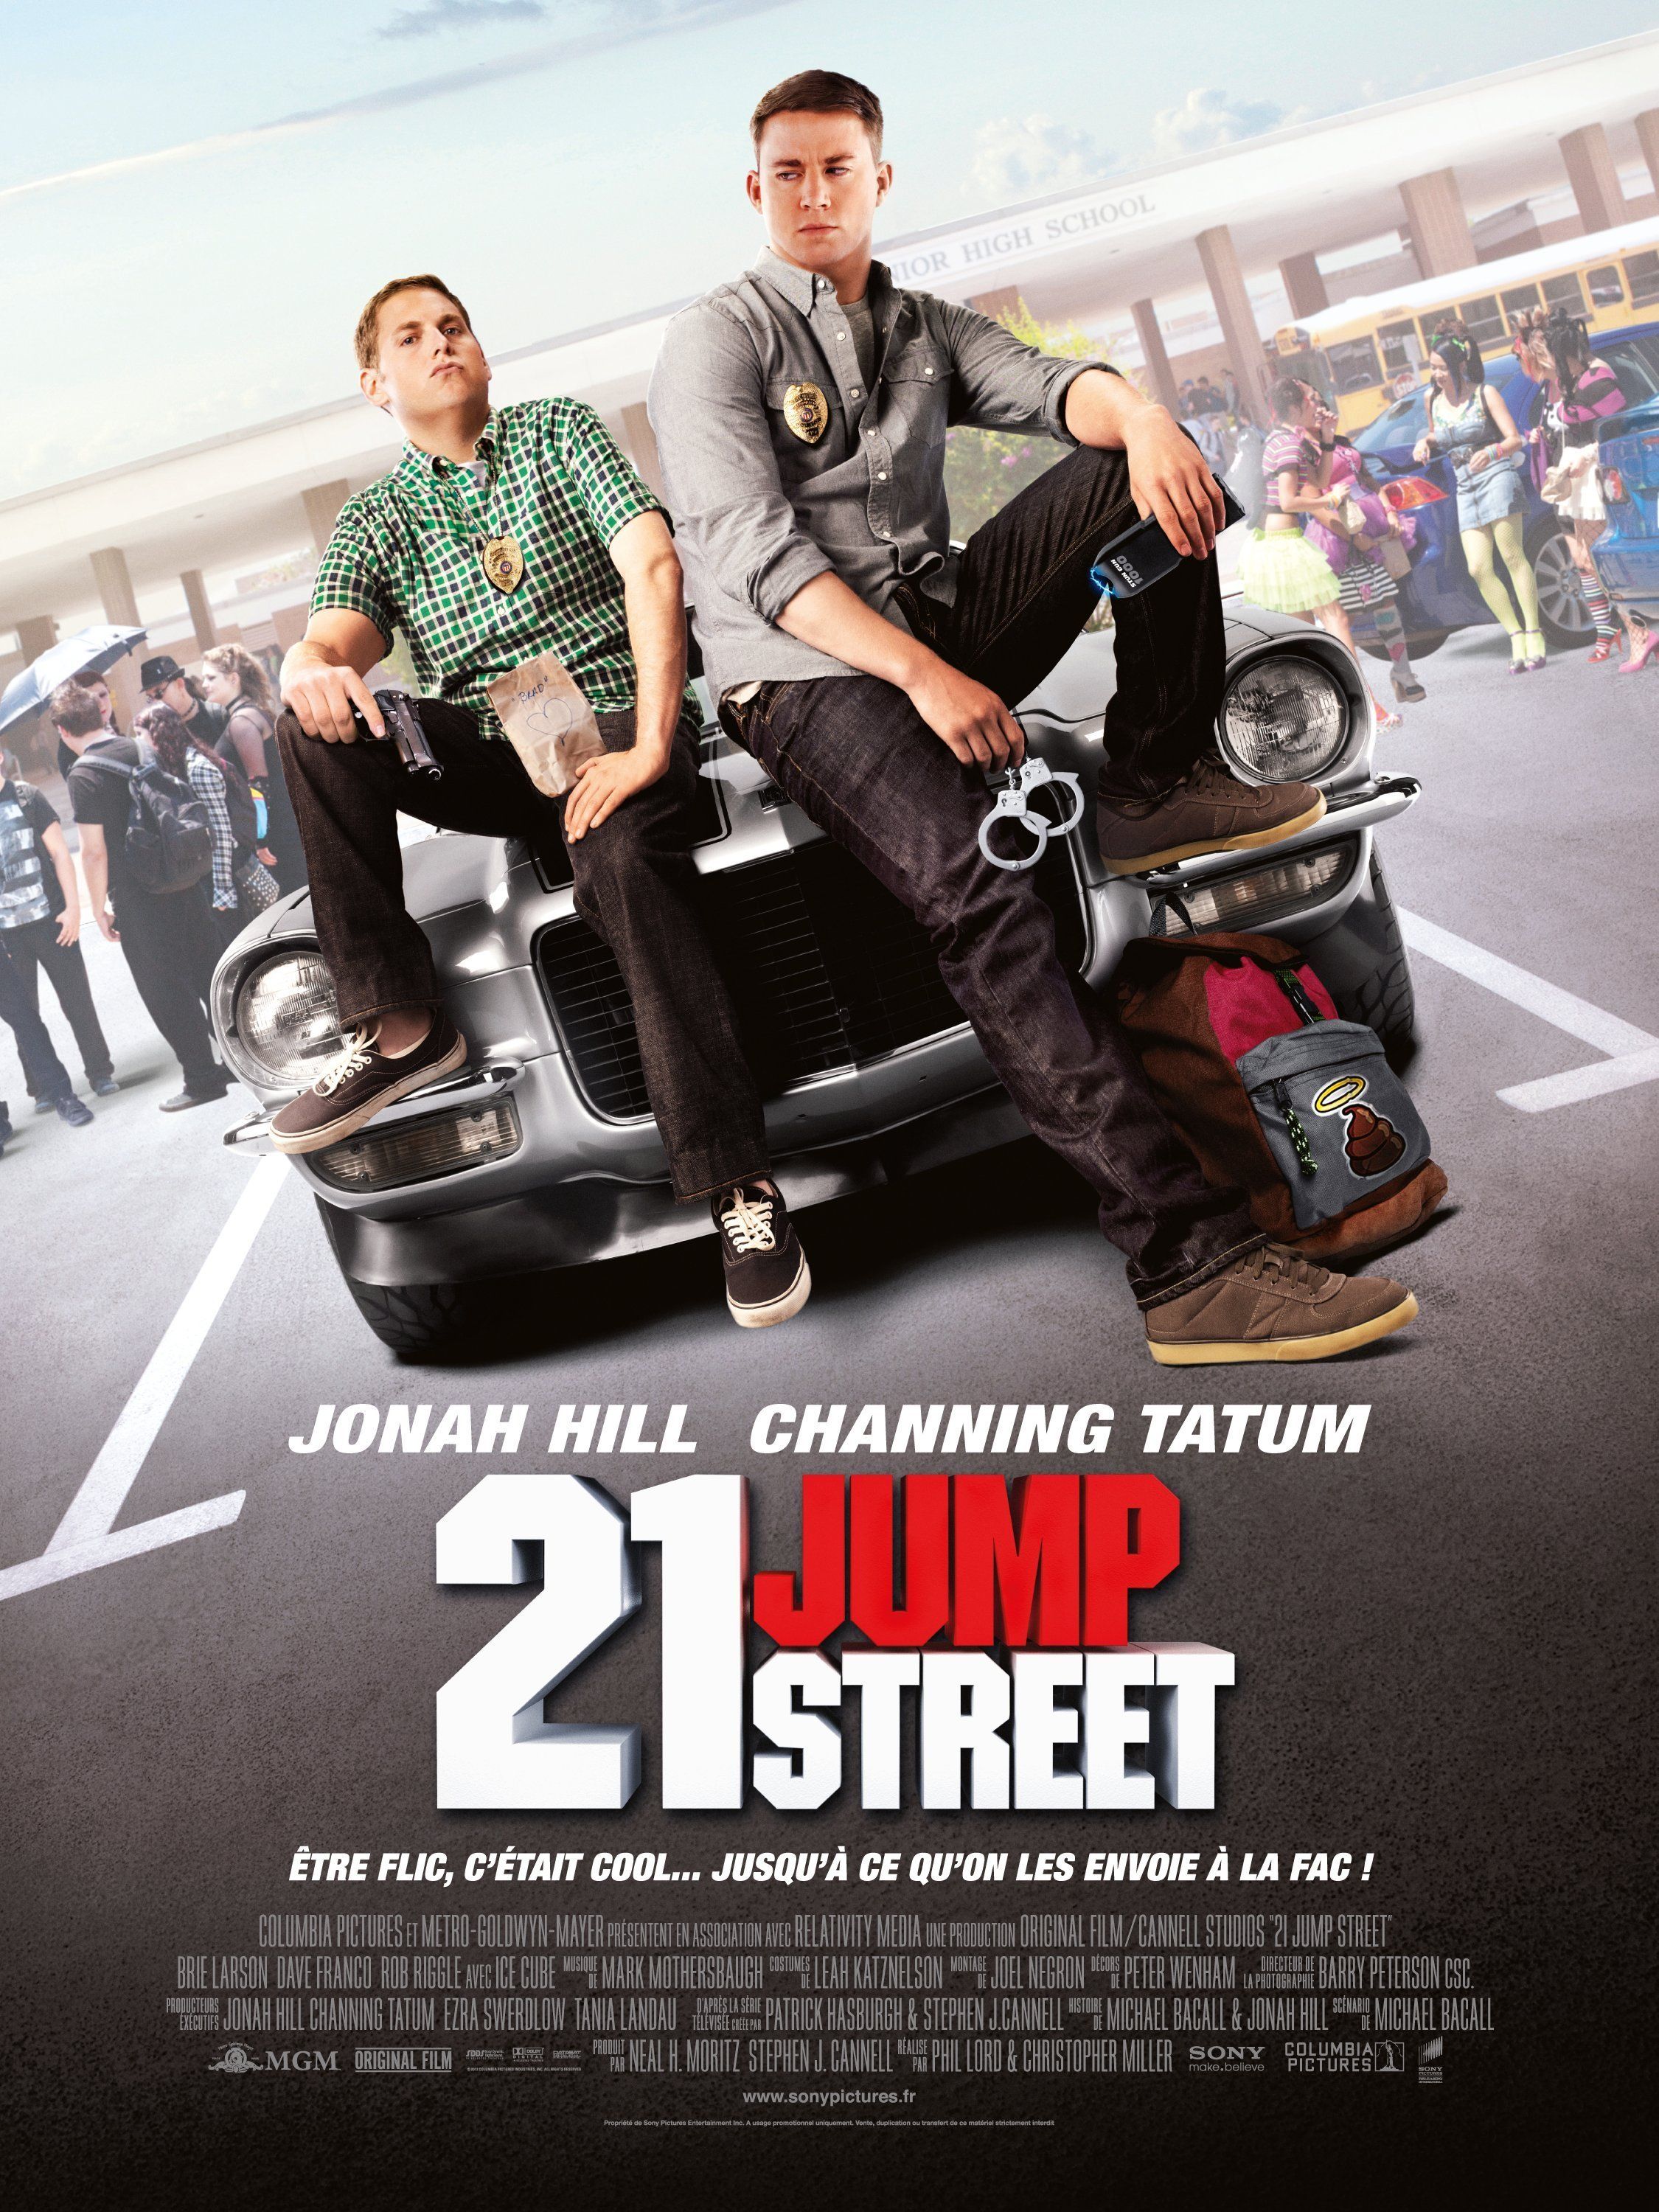 21 jump street 2 - lopilabel